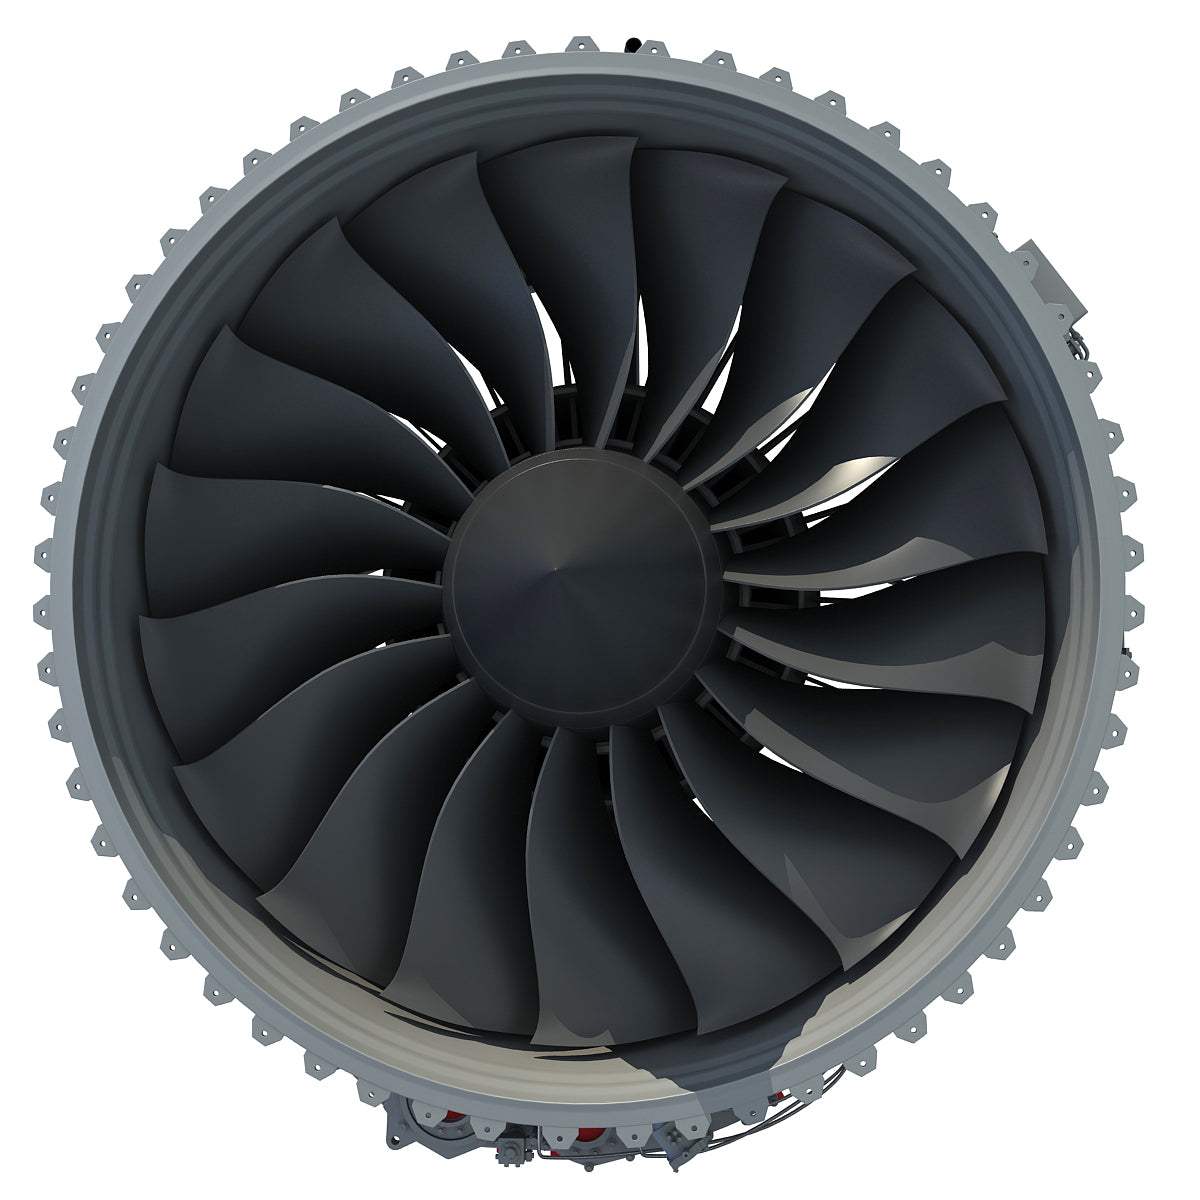 Rolls-Royce Trent 1000 Turbofan Aircraft Engine